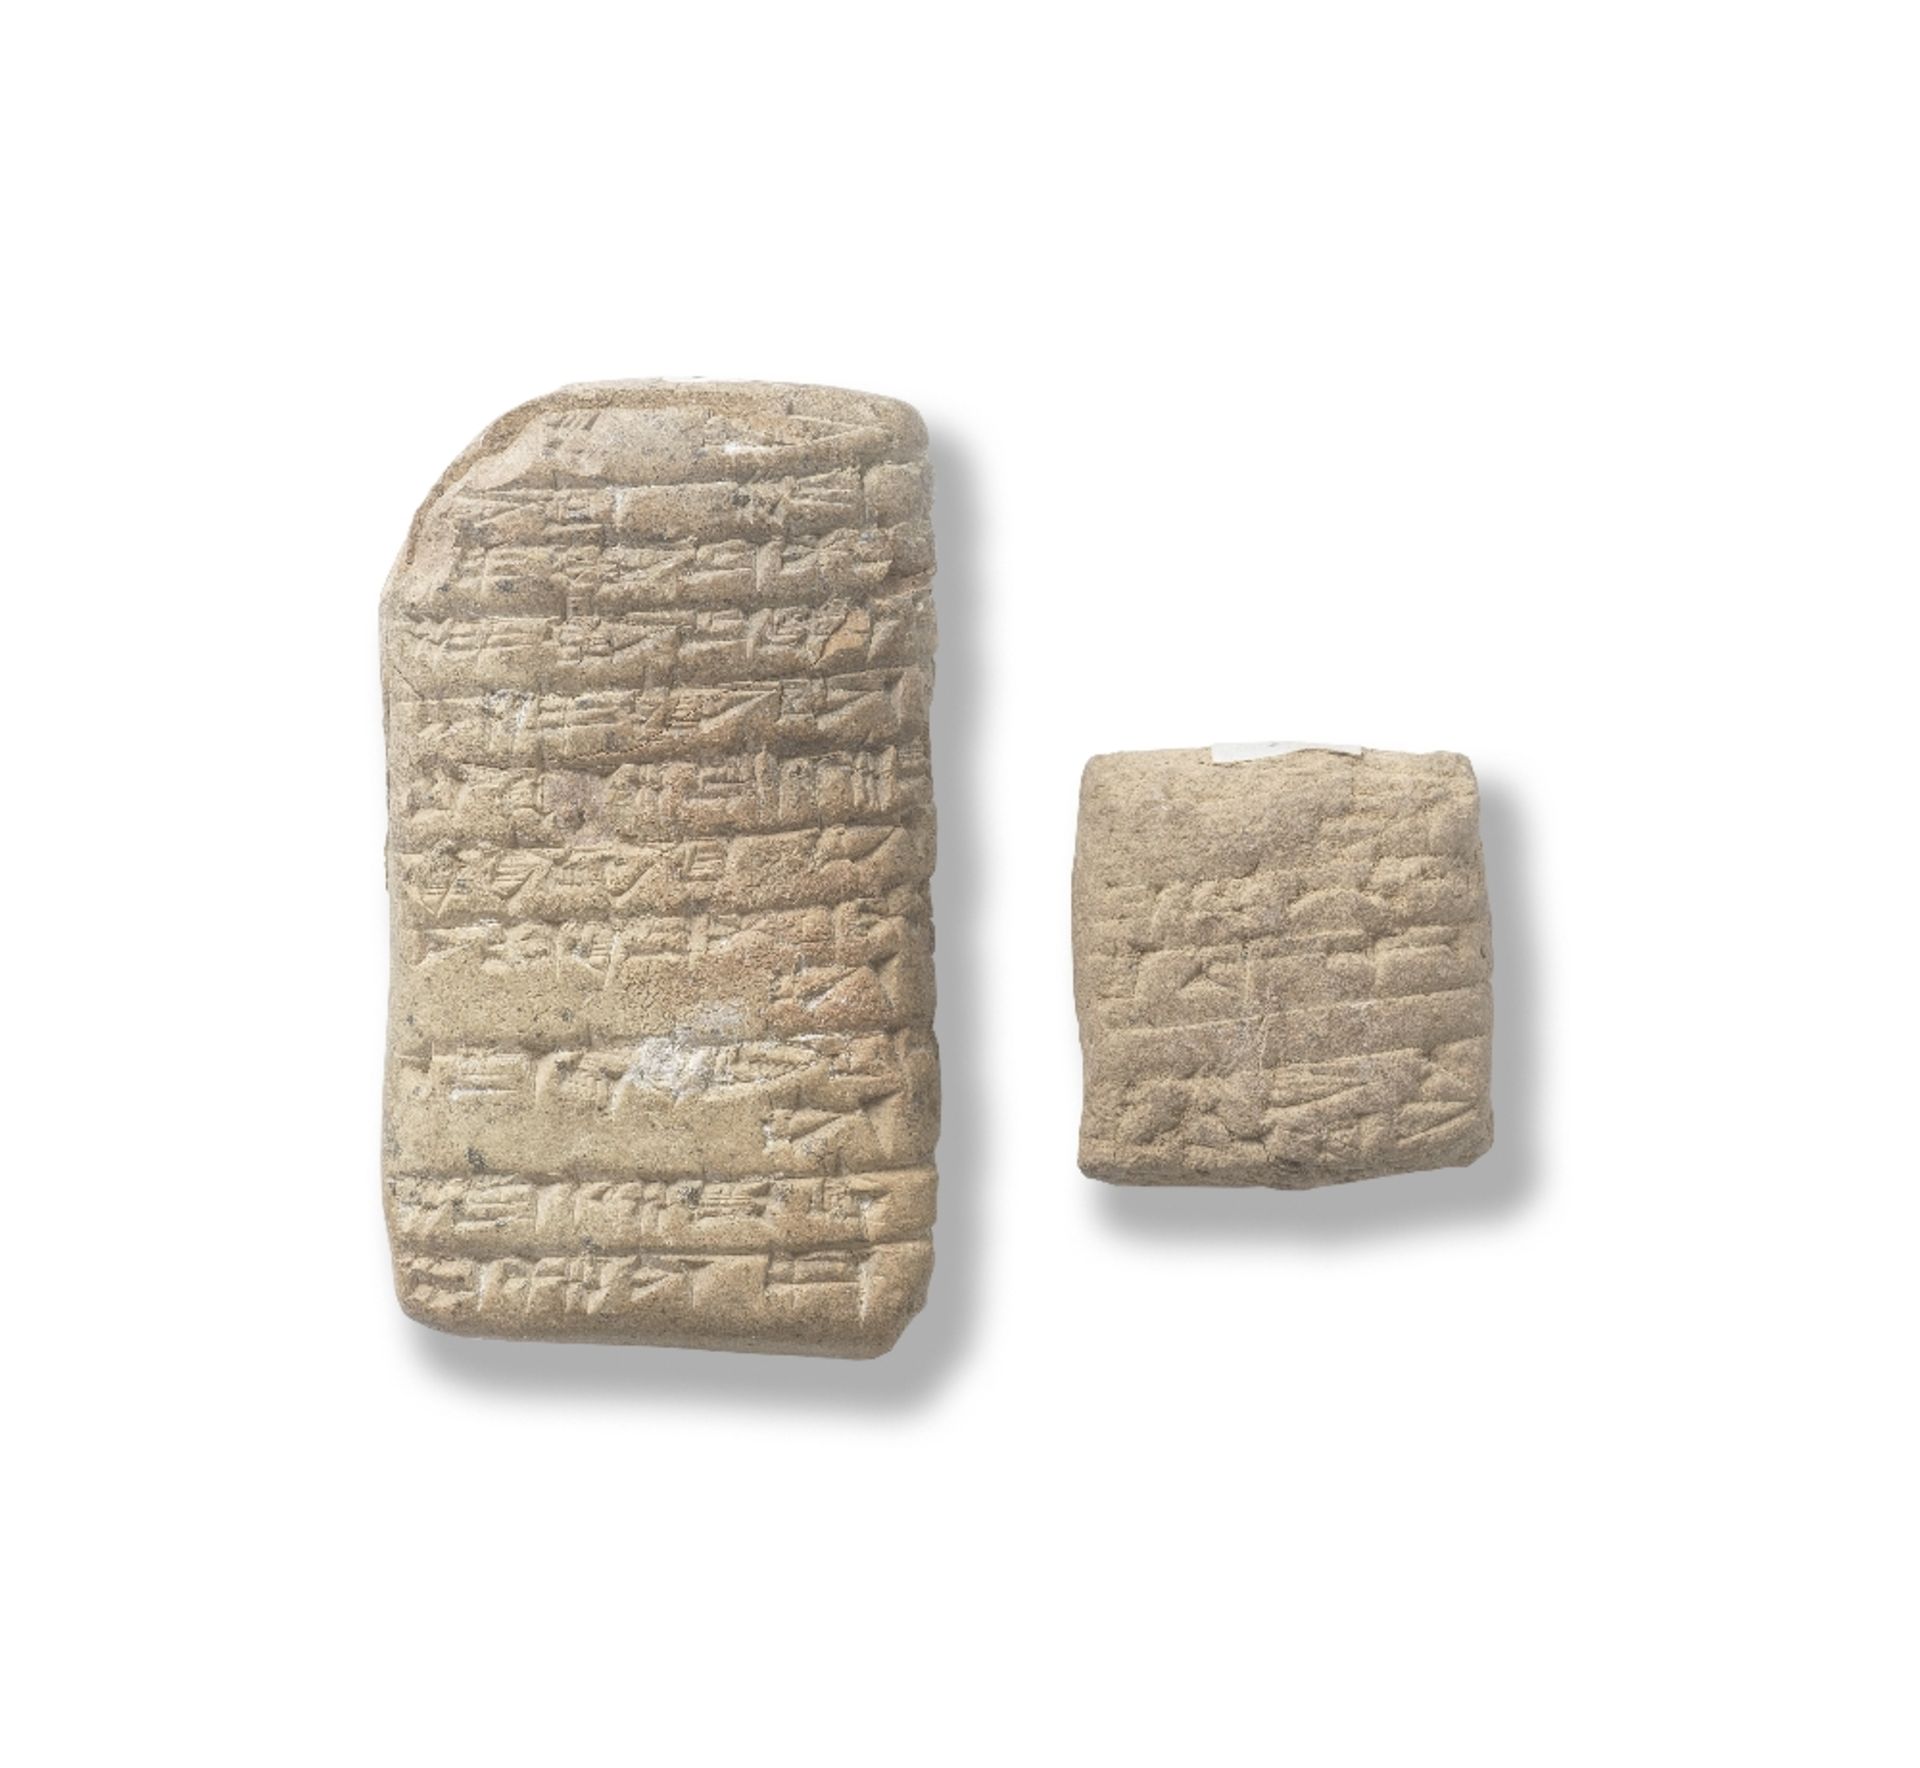 Two Neo-Sumerian terracotta cuneiform tablets 2